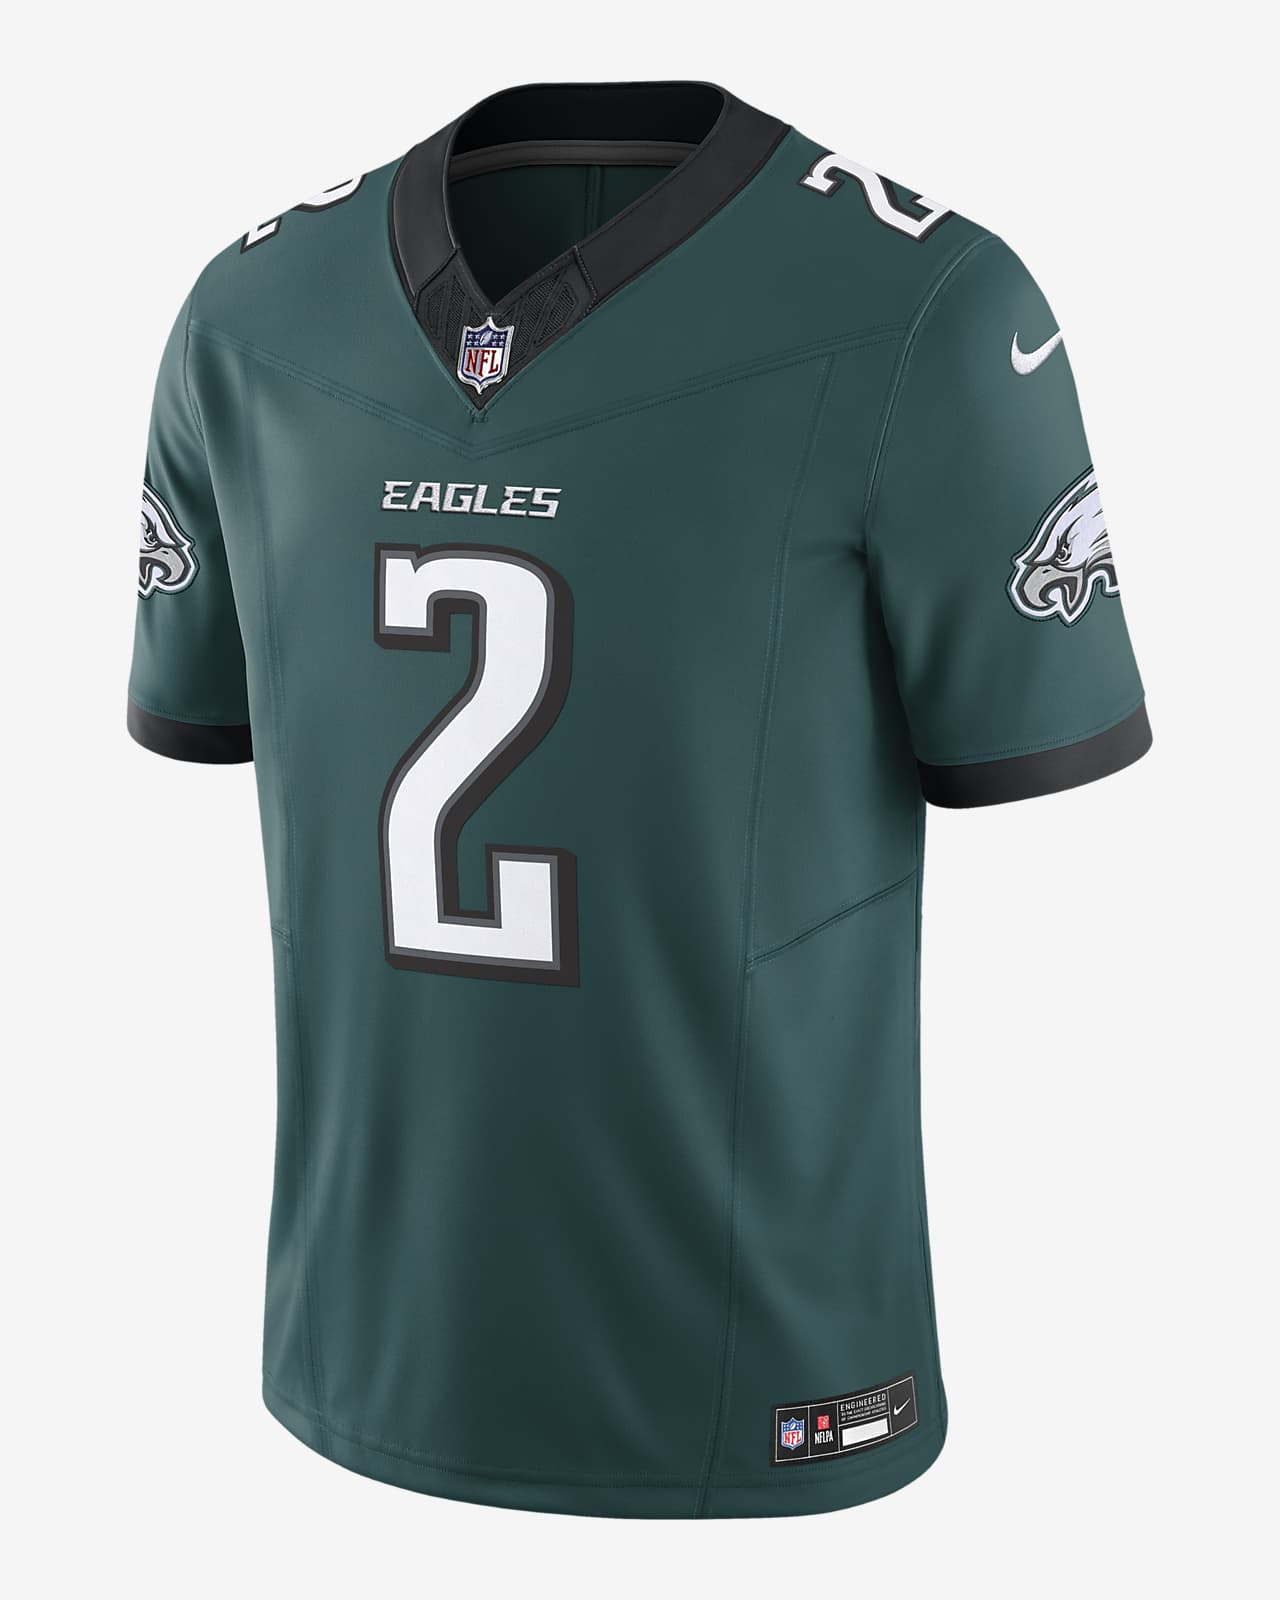 Darius Slay Philadelphia Eagles Men's Nike Dri-FIT NFL Limited Football Jersey